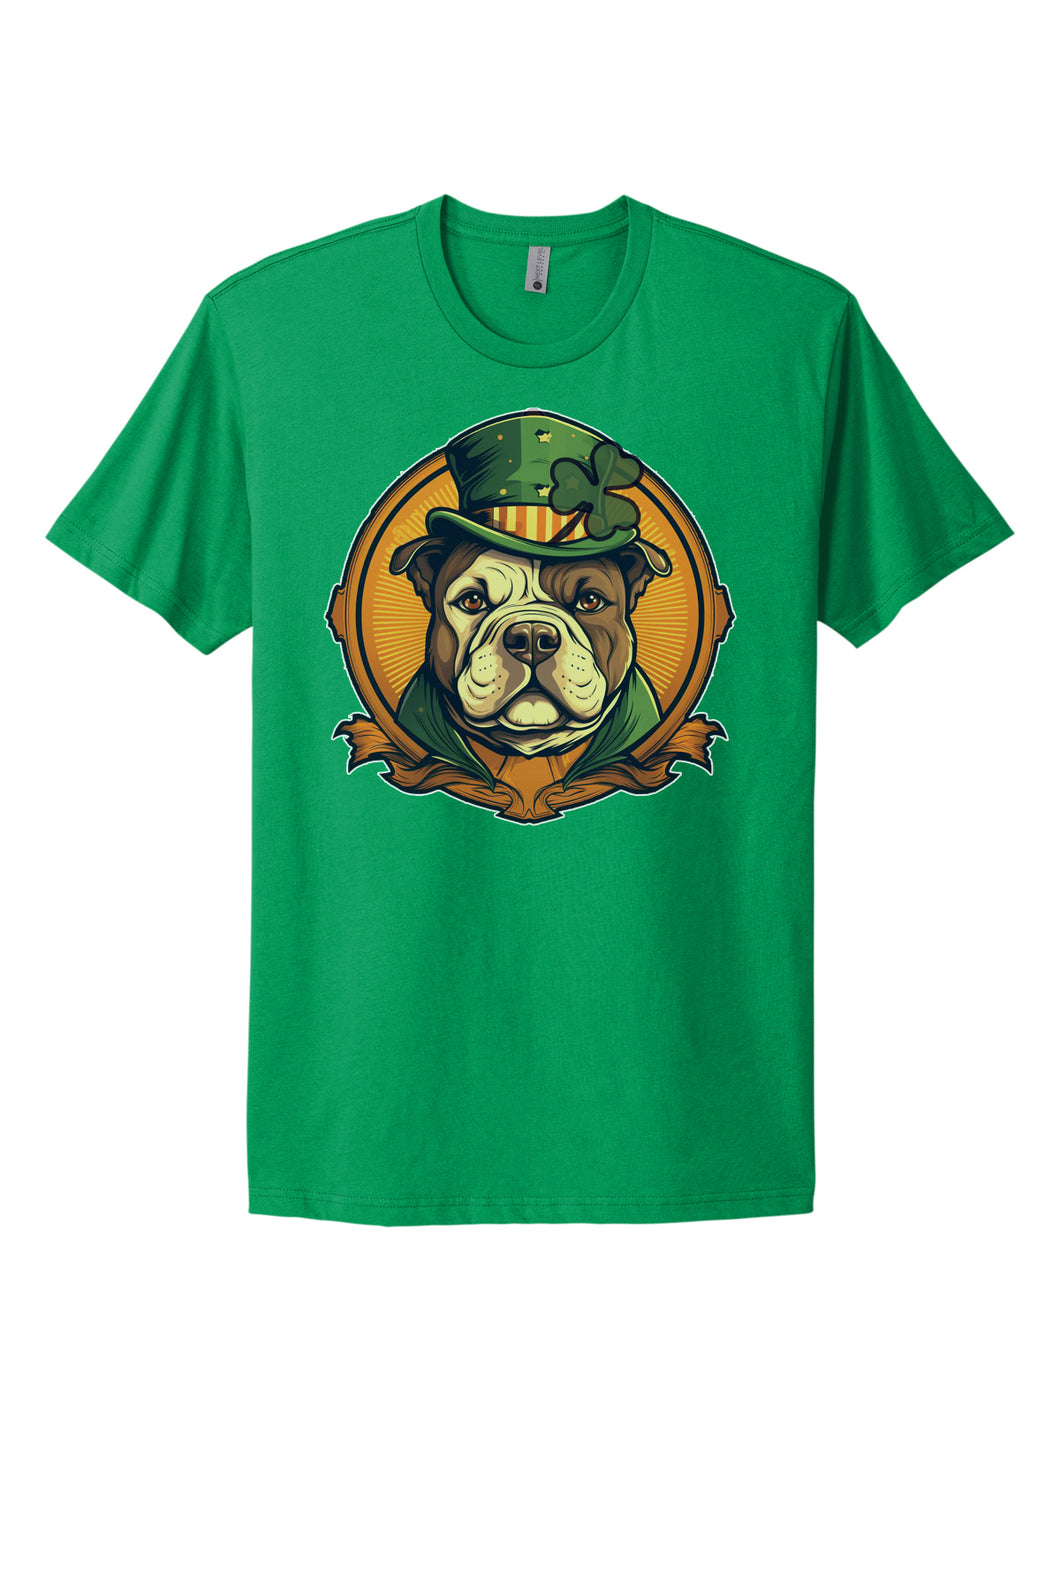 T-Shirt : American Bully Silhouette - St Patrick - Leprechaun Bully